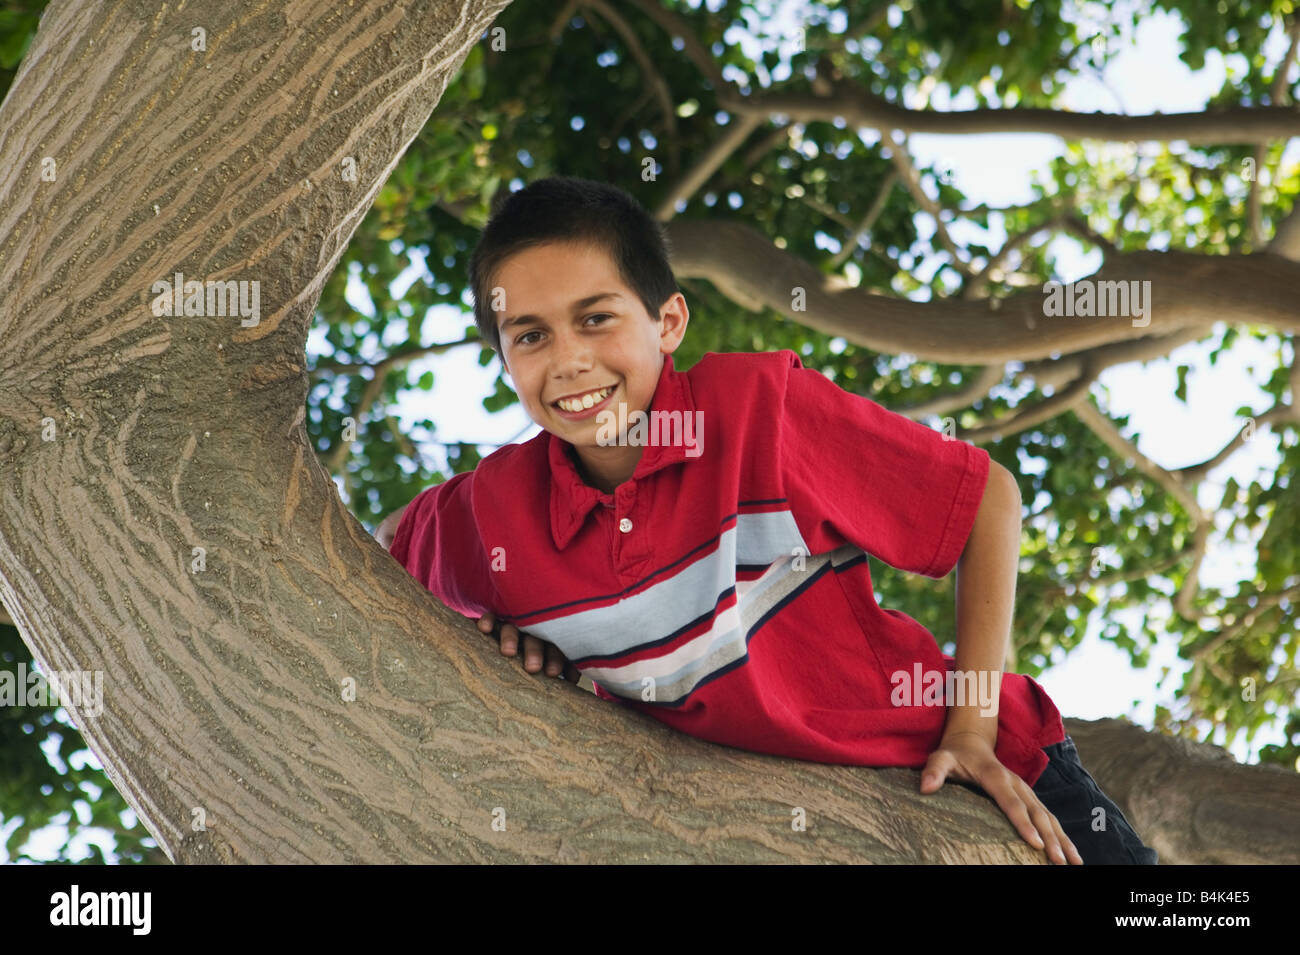 Hispanic boy climbing tree Stock Photo